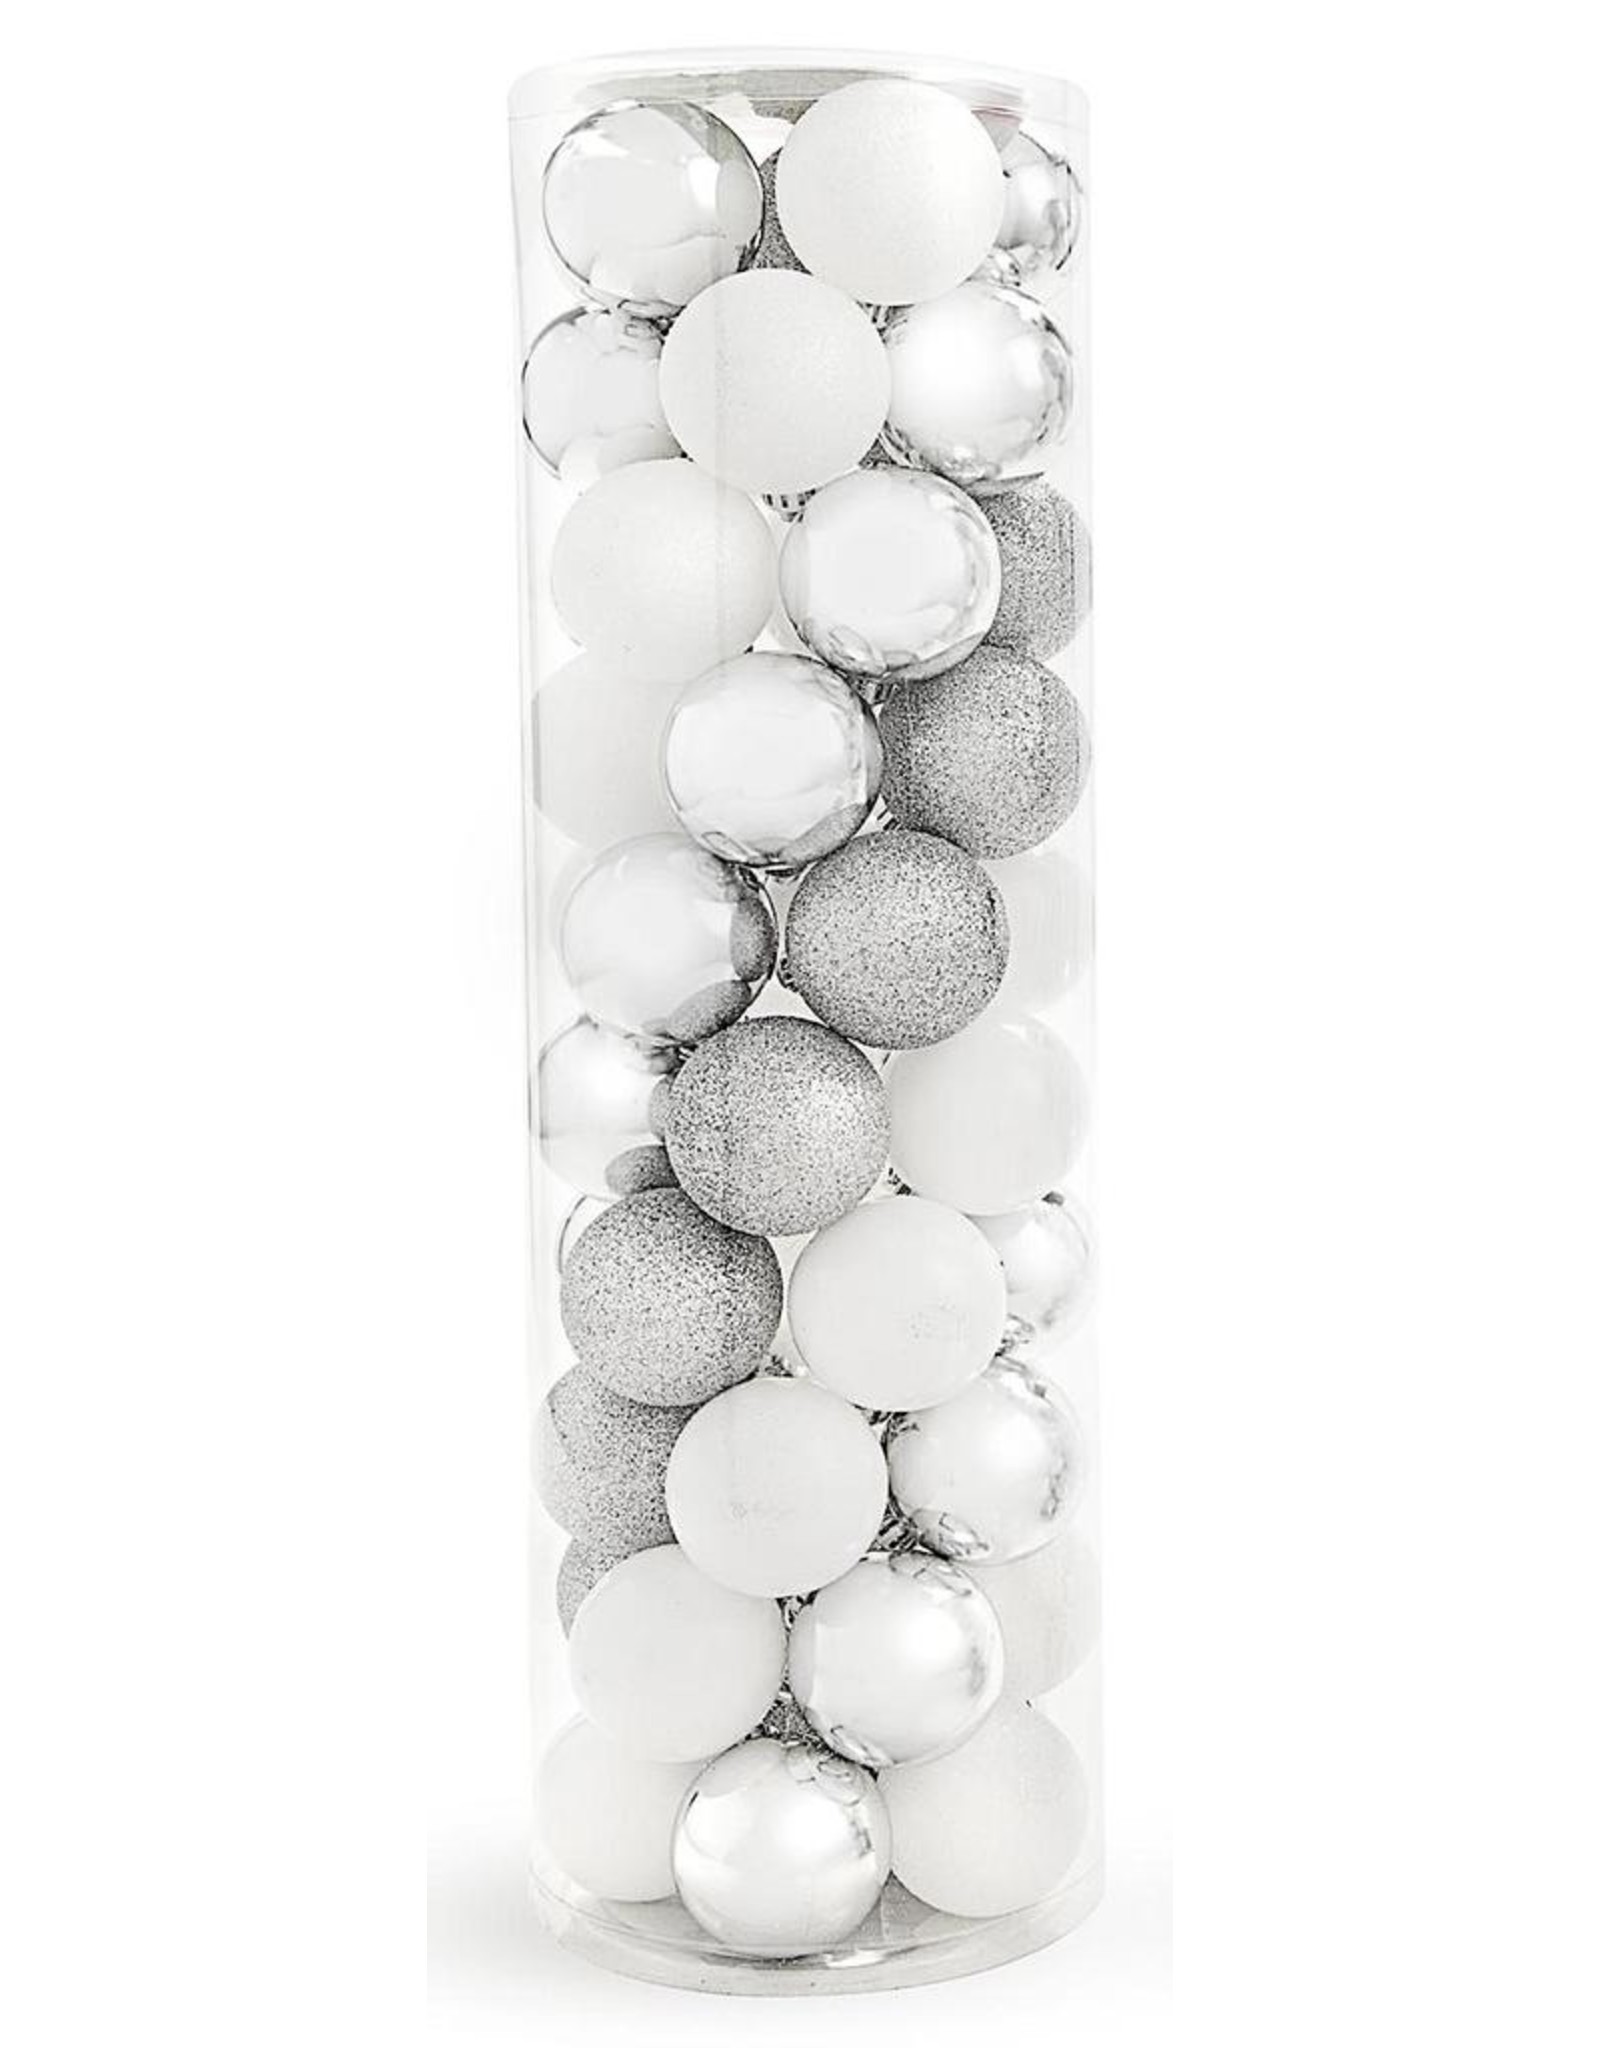 Darice Shatterproof Plastic Christmas Ornaments 57mm 50pk Silver White -A